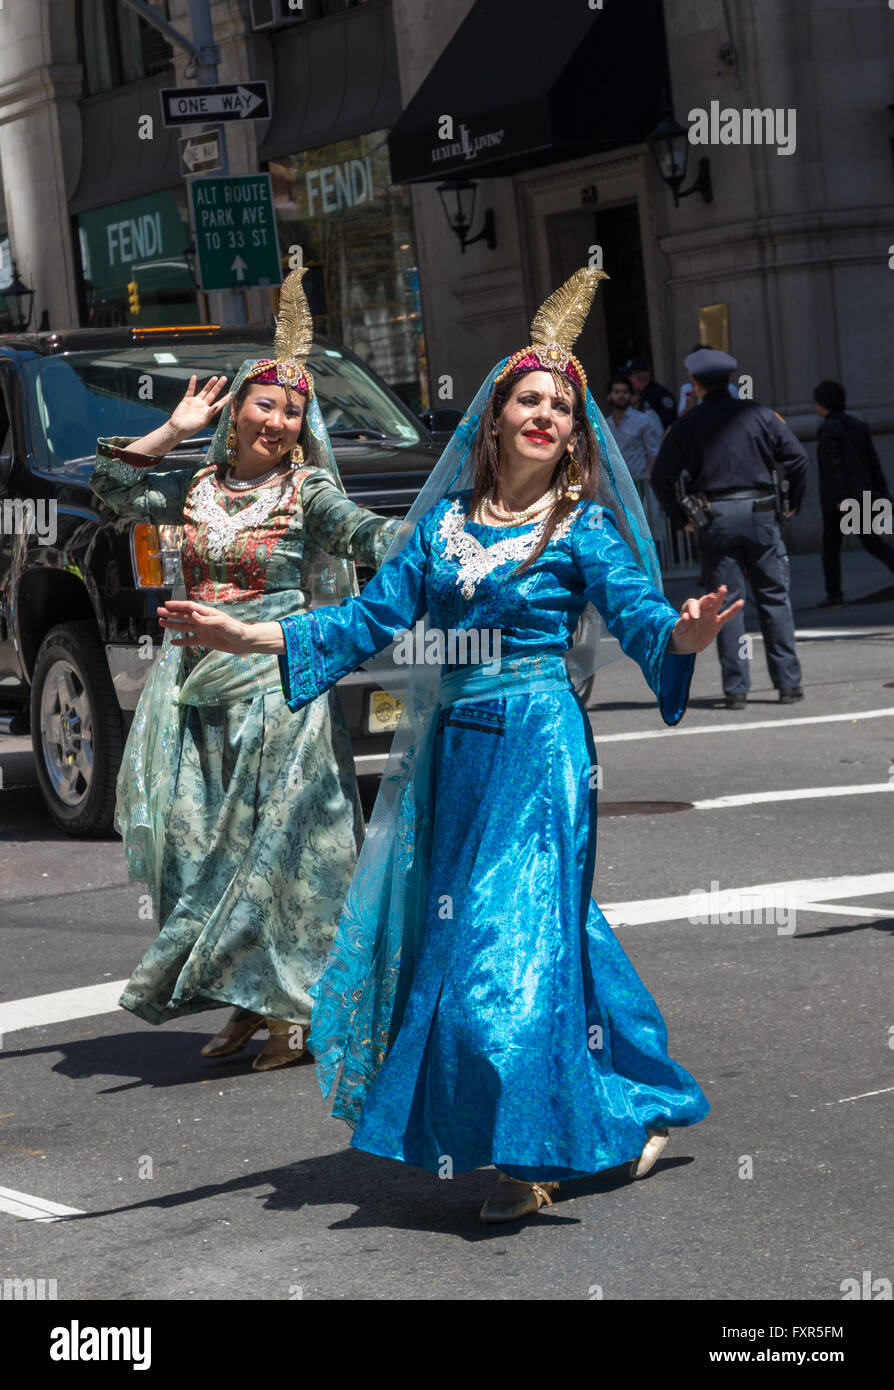 https://c8.alamy.com/comp/FXR5FM/two-women-dressed-in-traditional-persian-iranian-costume-dancing-down-FXR5FM.jpg